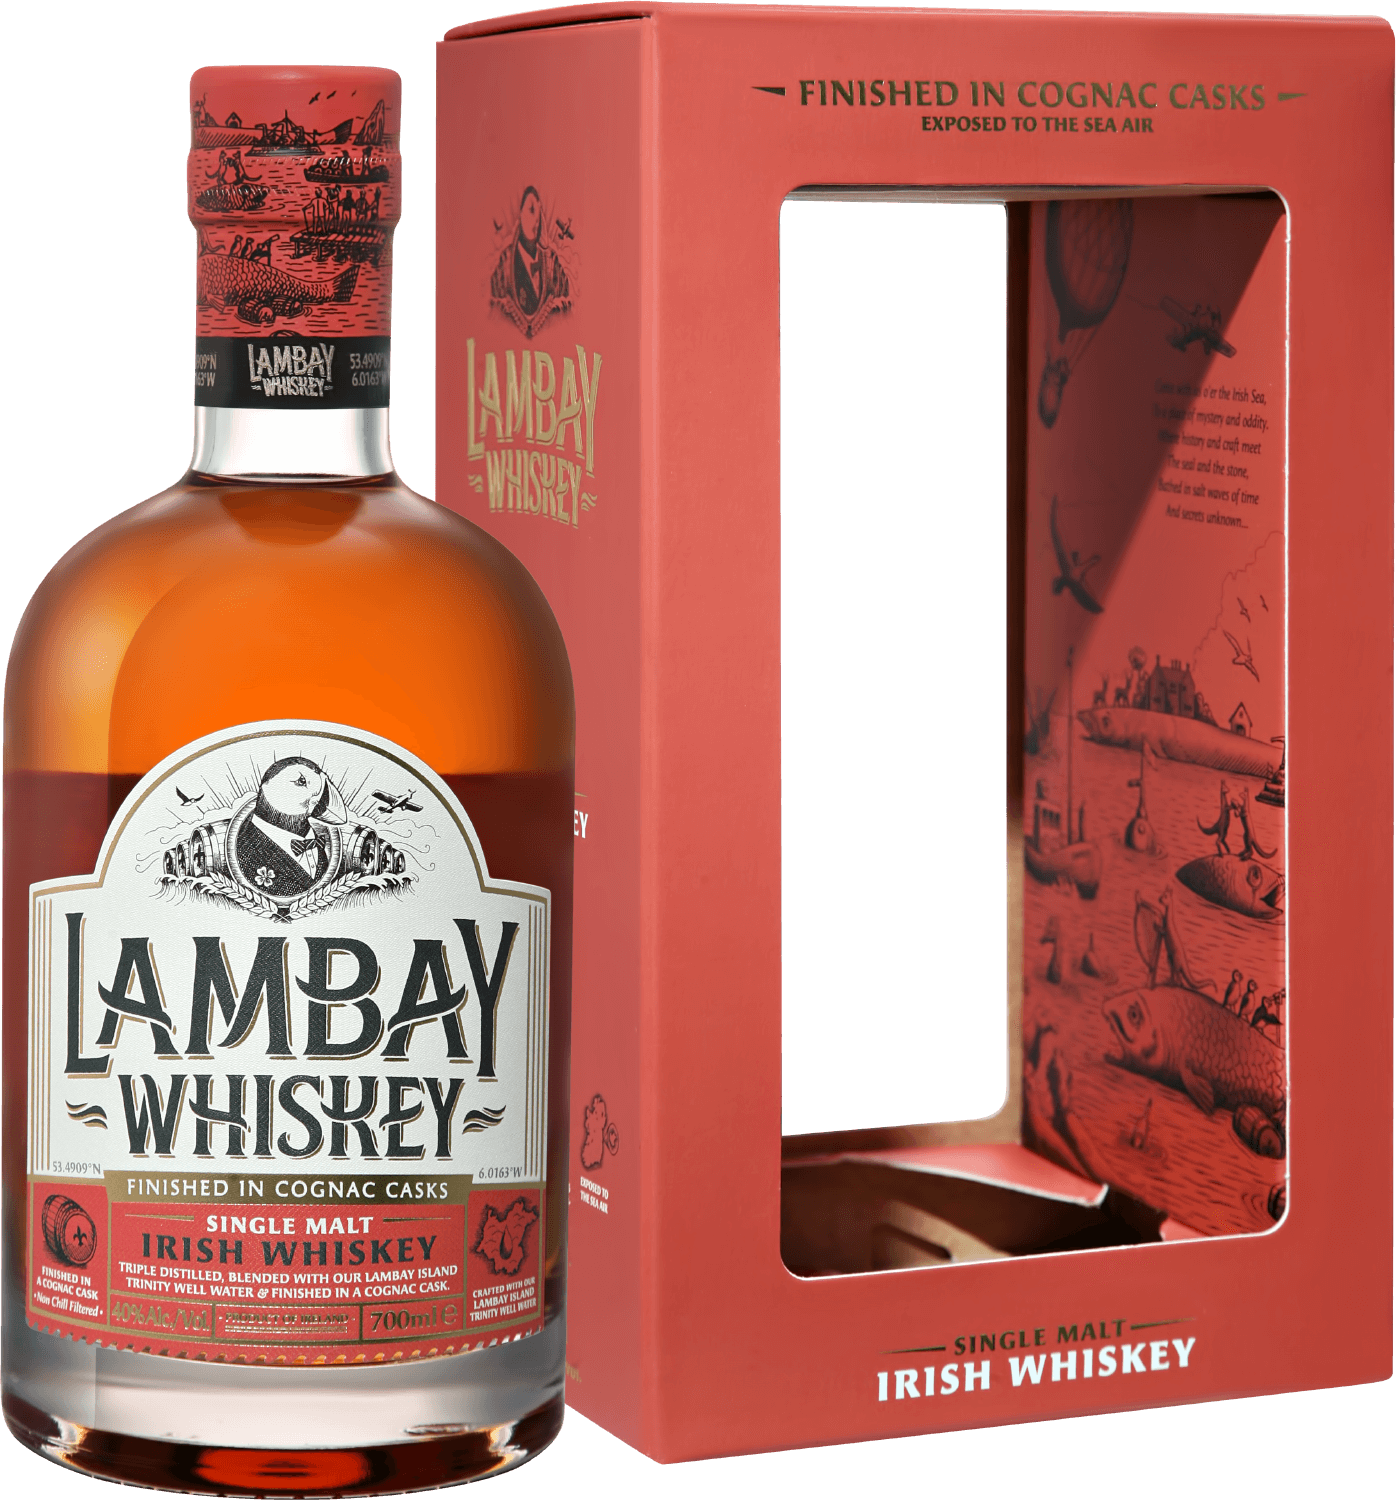 Lambay Single Malt Irish Whiskey 5 y.o. (gift box) west cork glengarriff series bog oak charred cask single malt irish whiskey